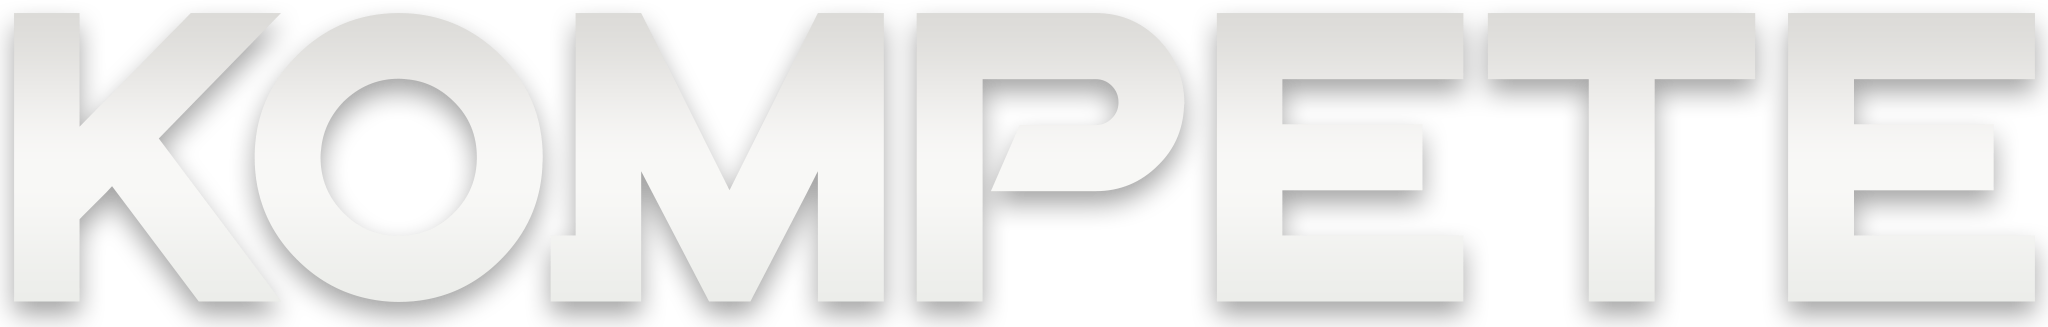 kompete logo.png